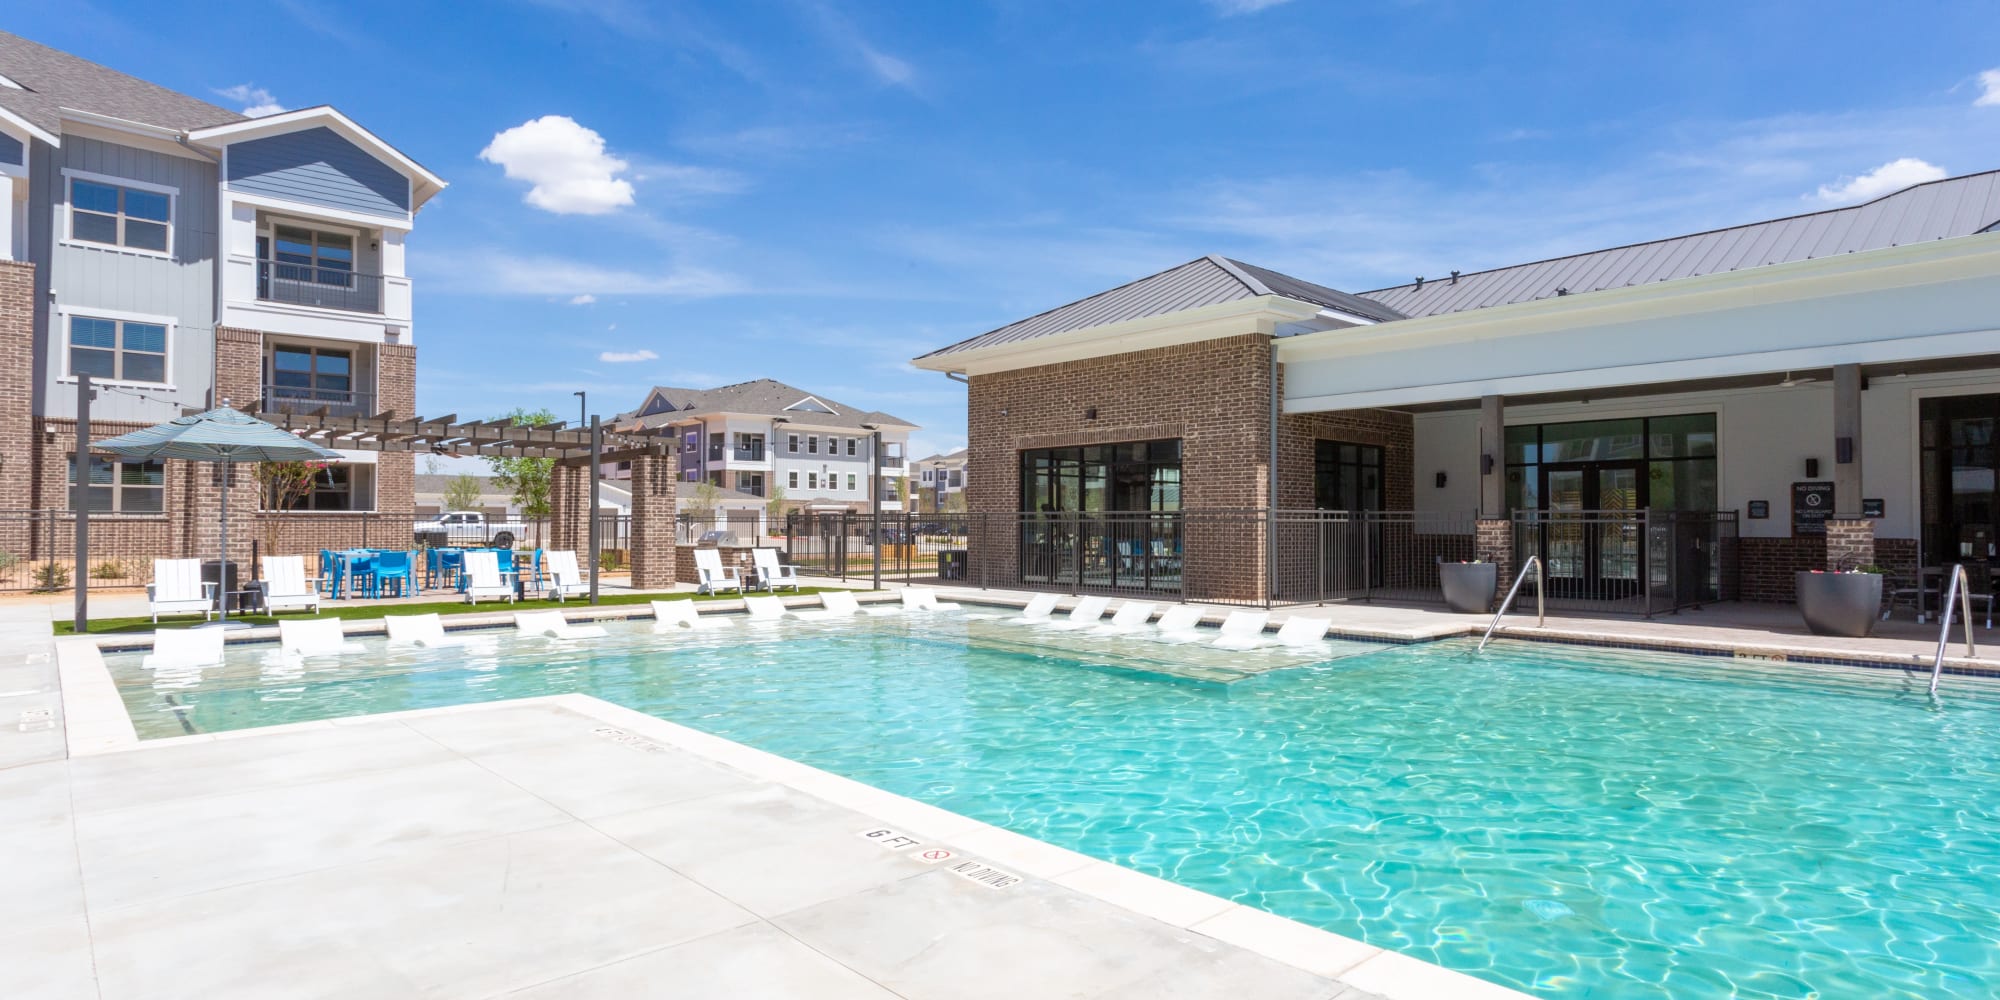 Apartments at Coronado on Briarwood in Midland, Texas